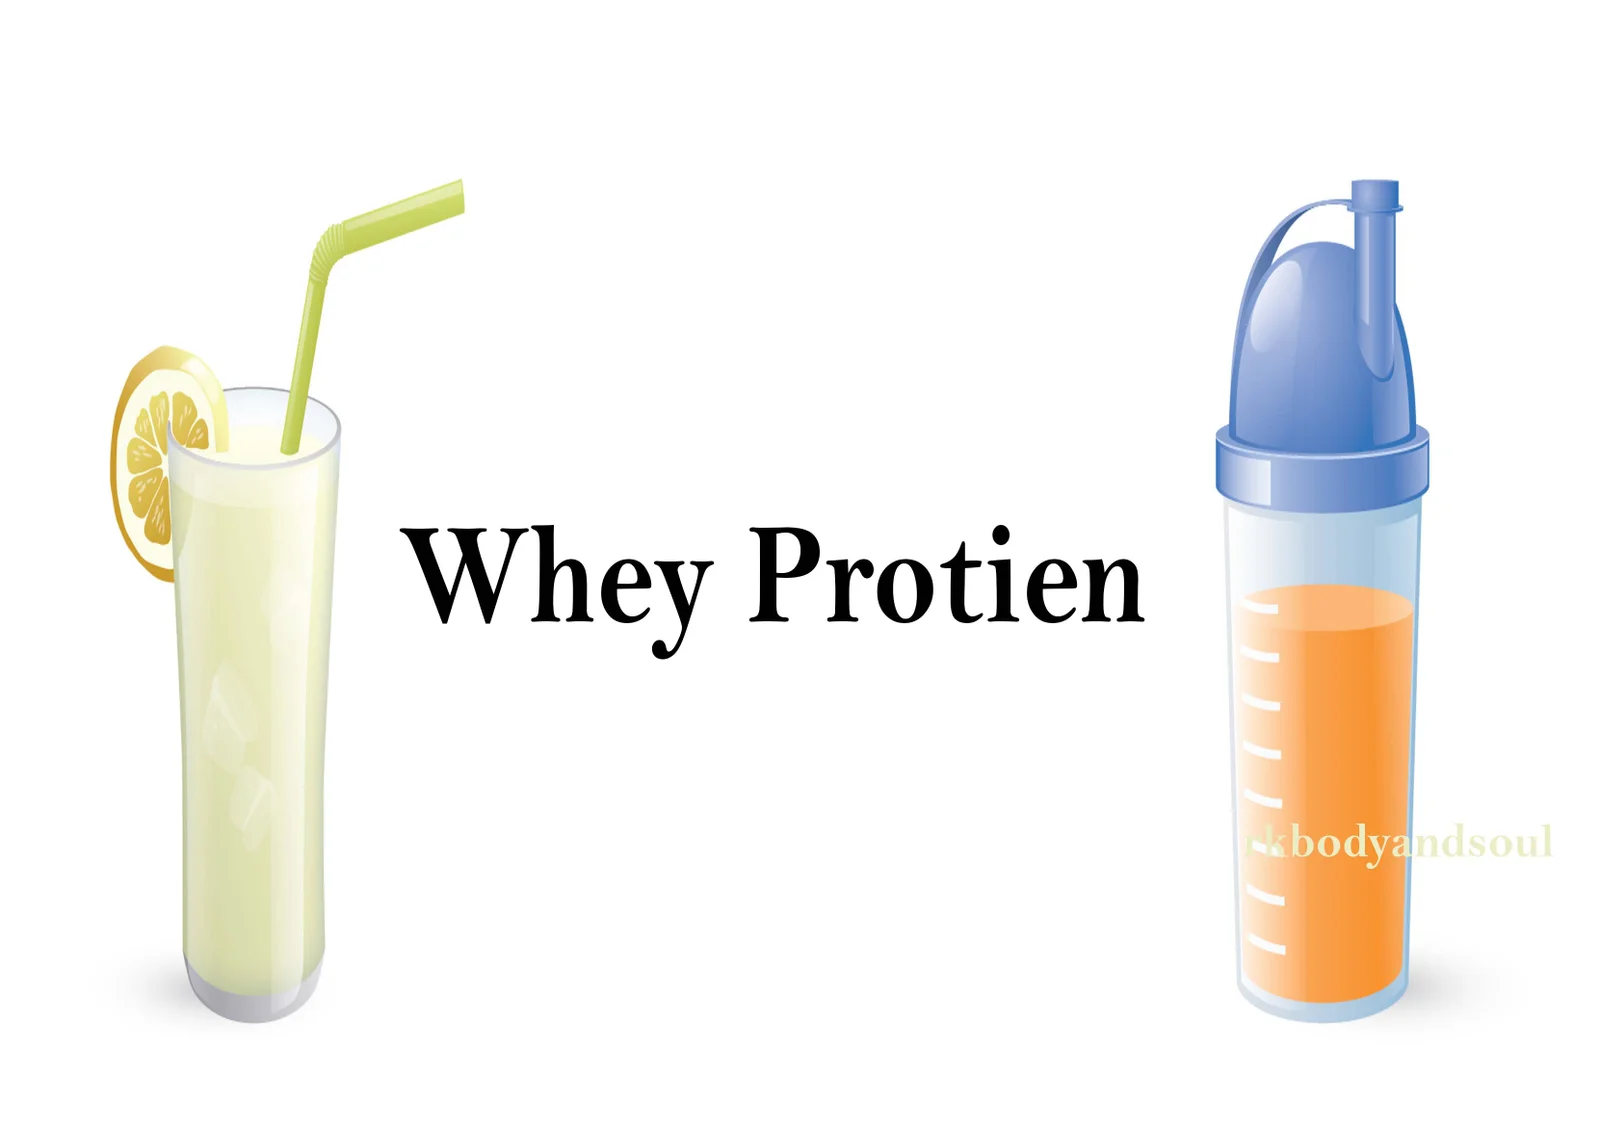 whey protien supplements for bodybuilding